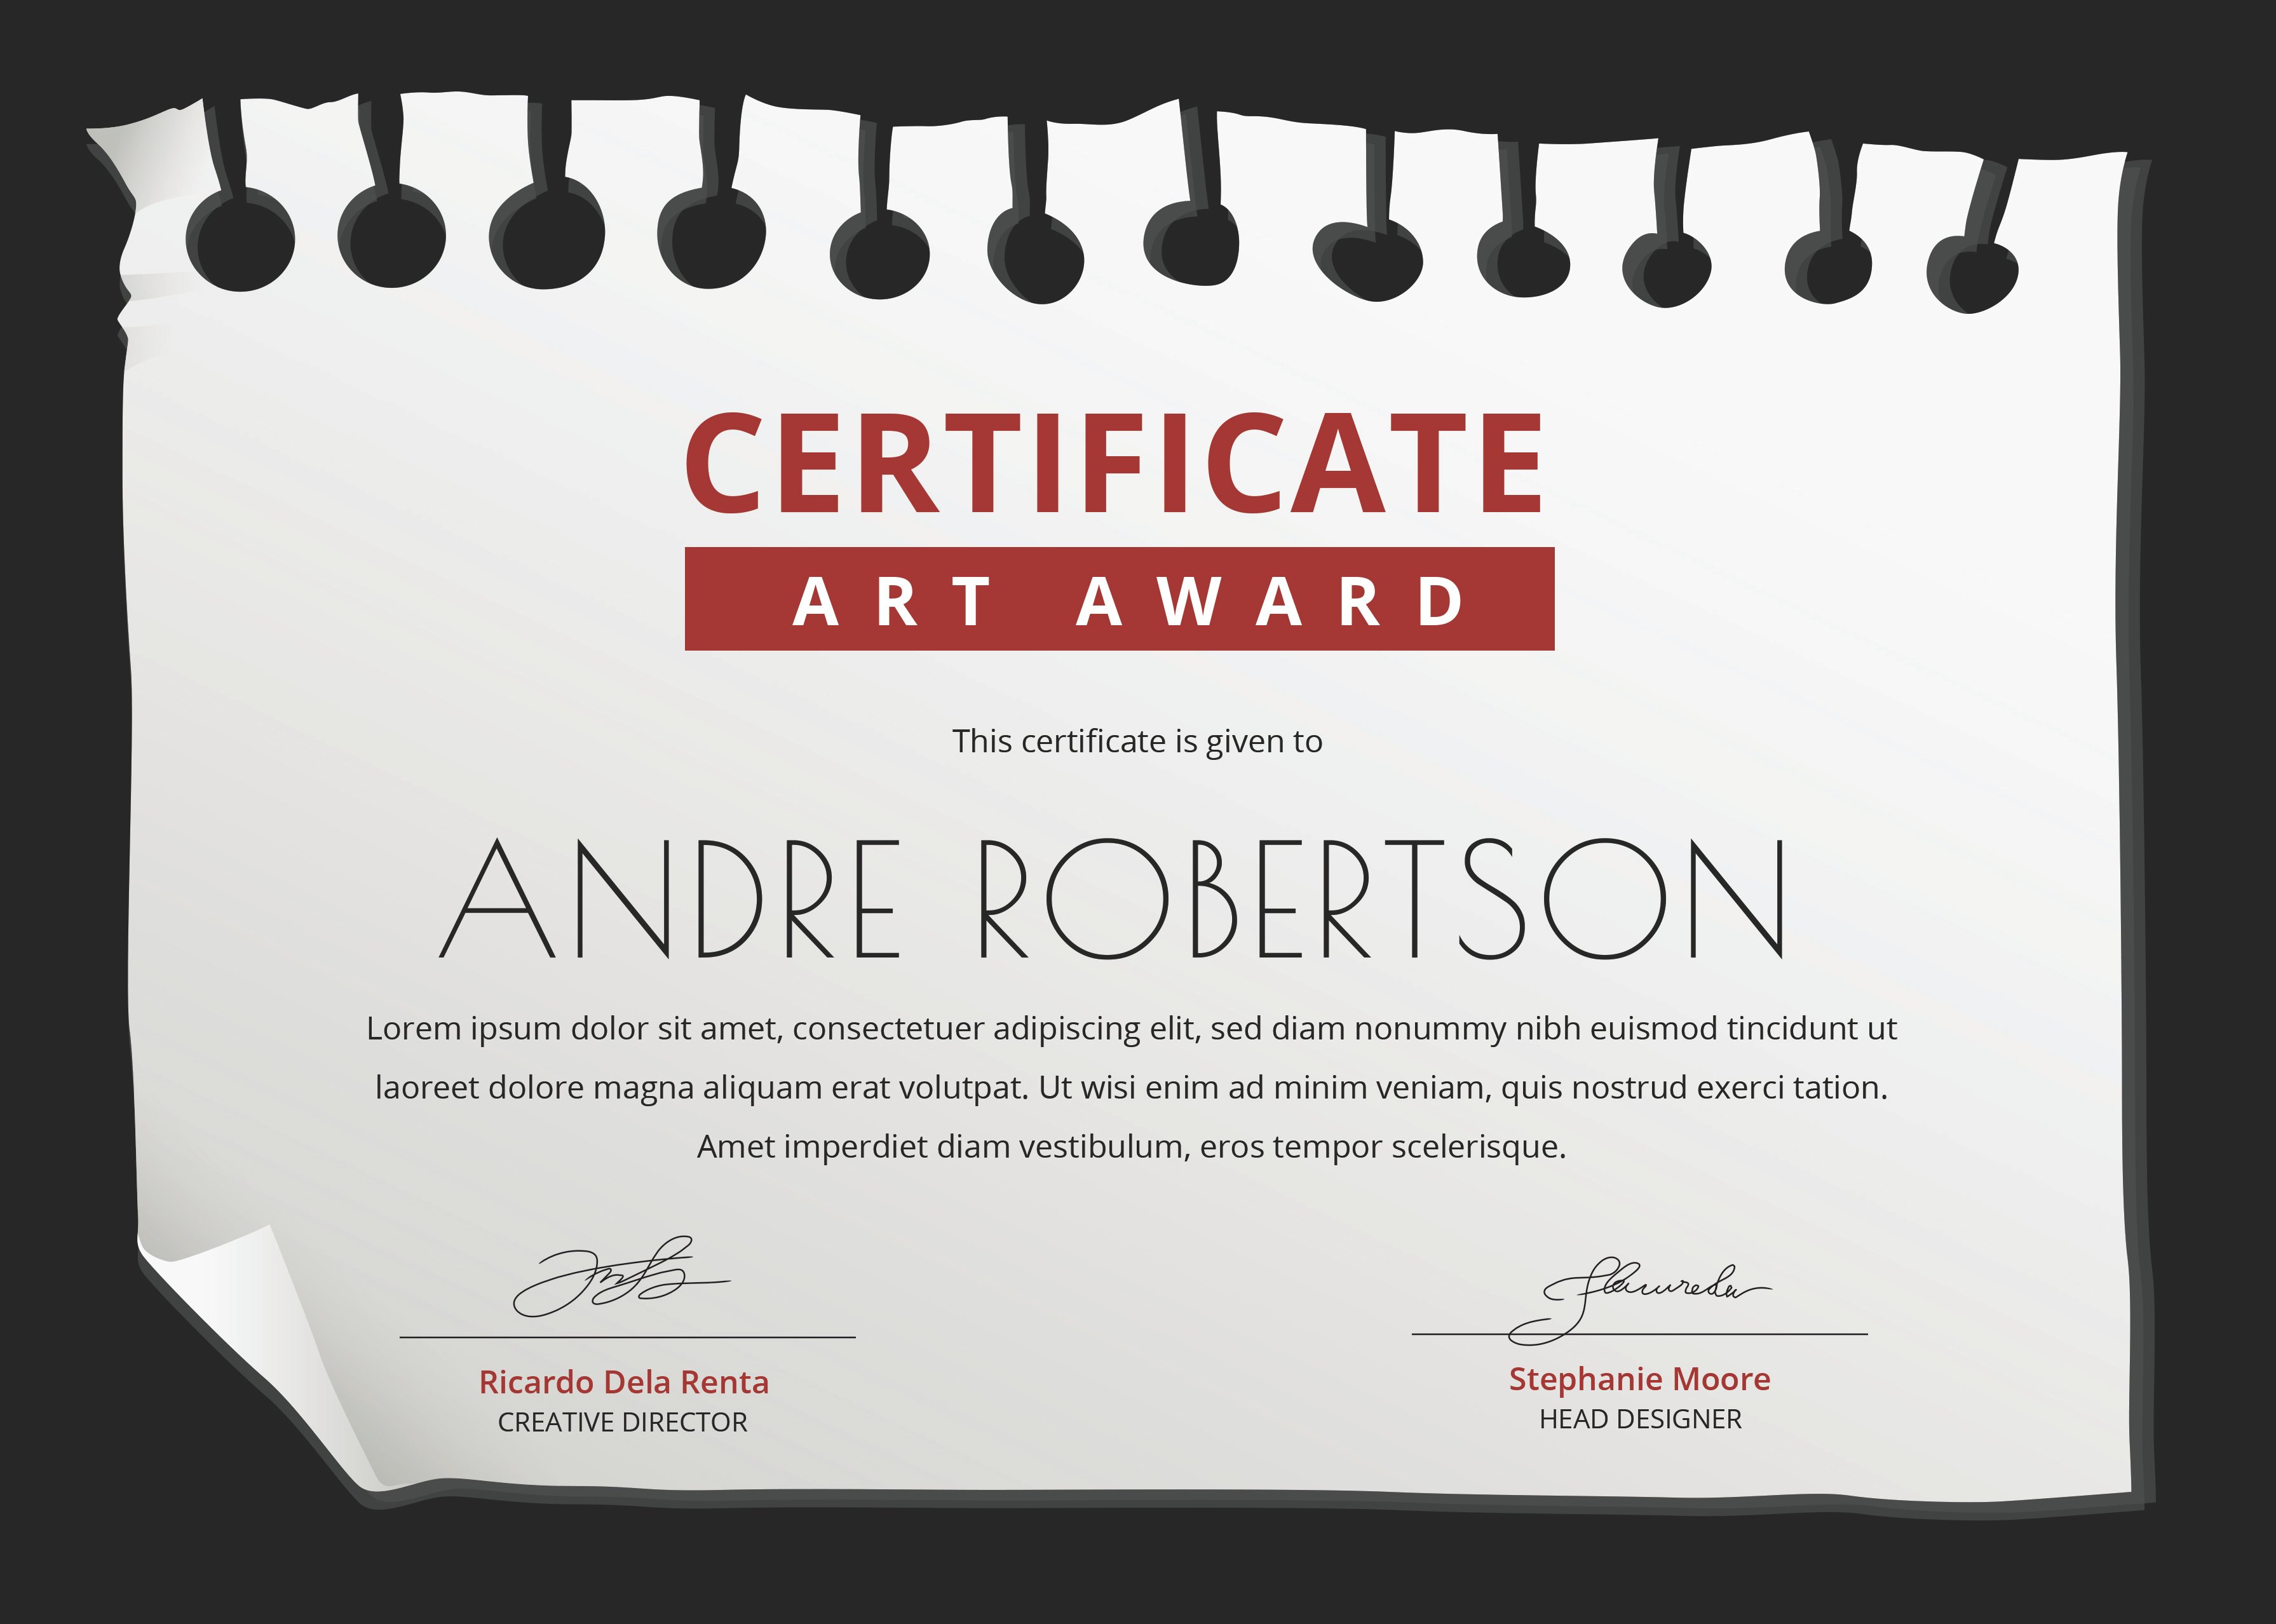 Free Art Award Certificate Template in Adobe Photoshop Illustrator